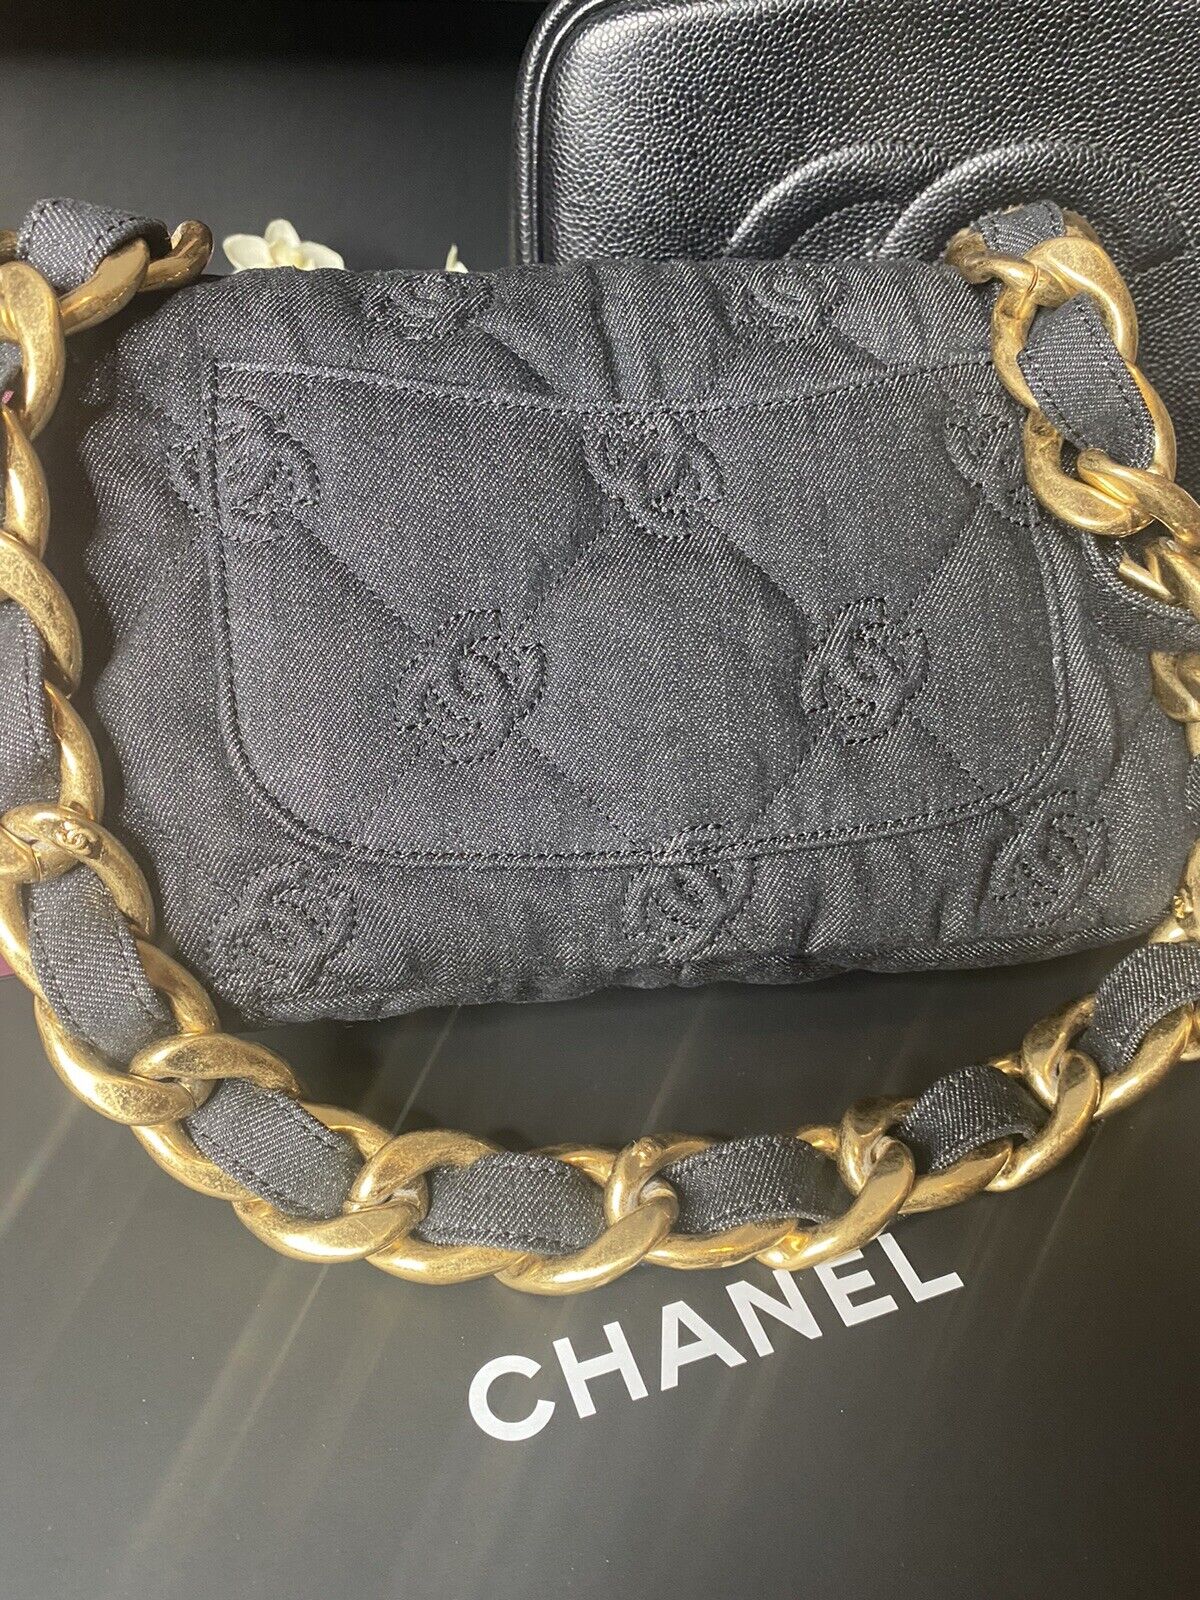 Chanel 22 handbag